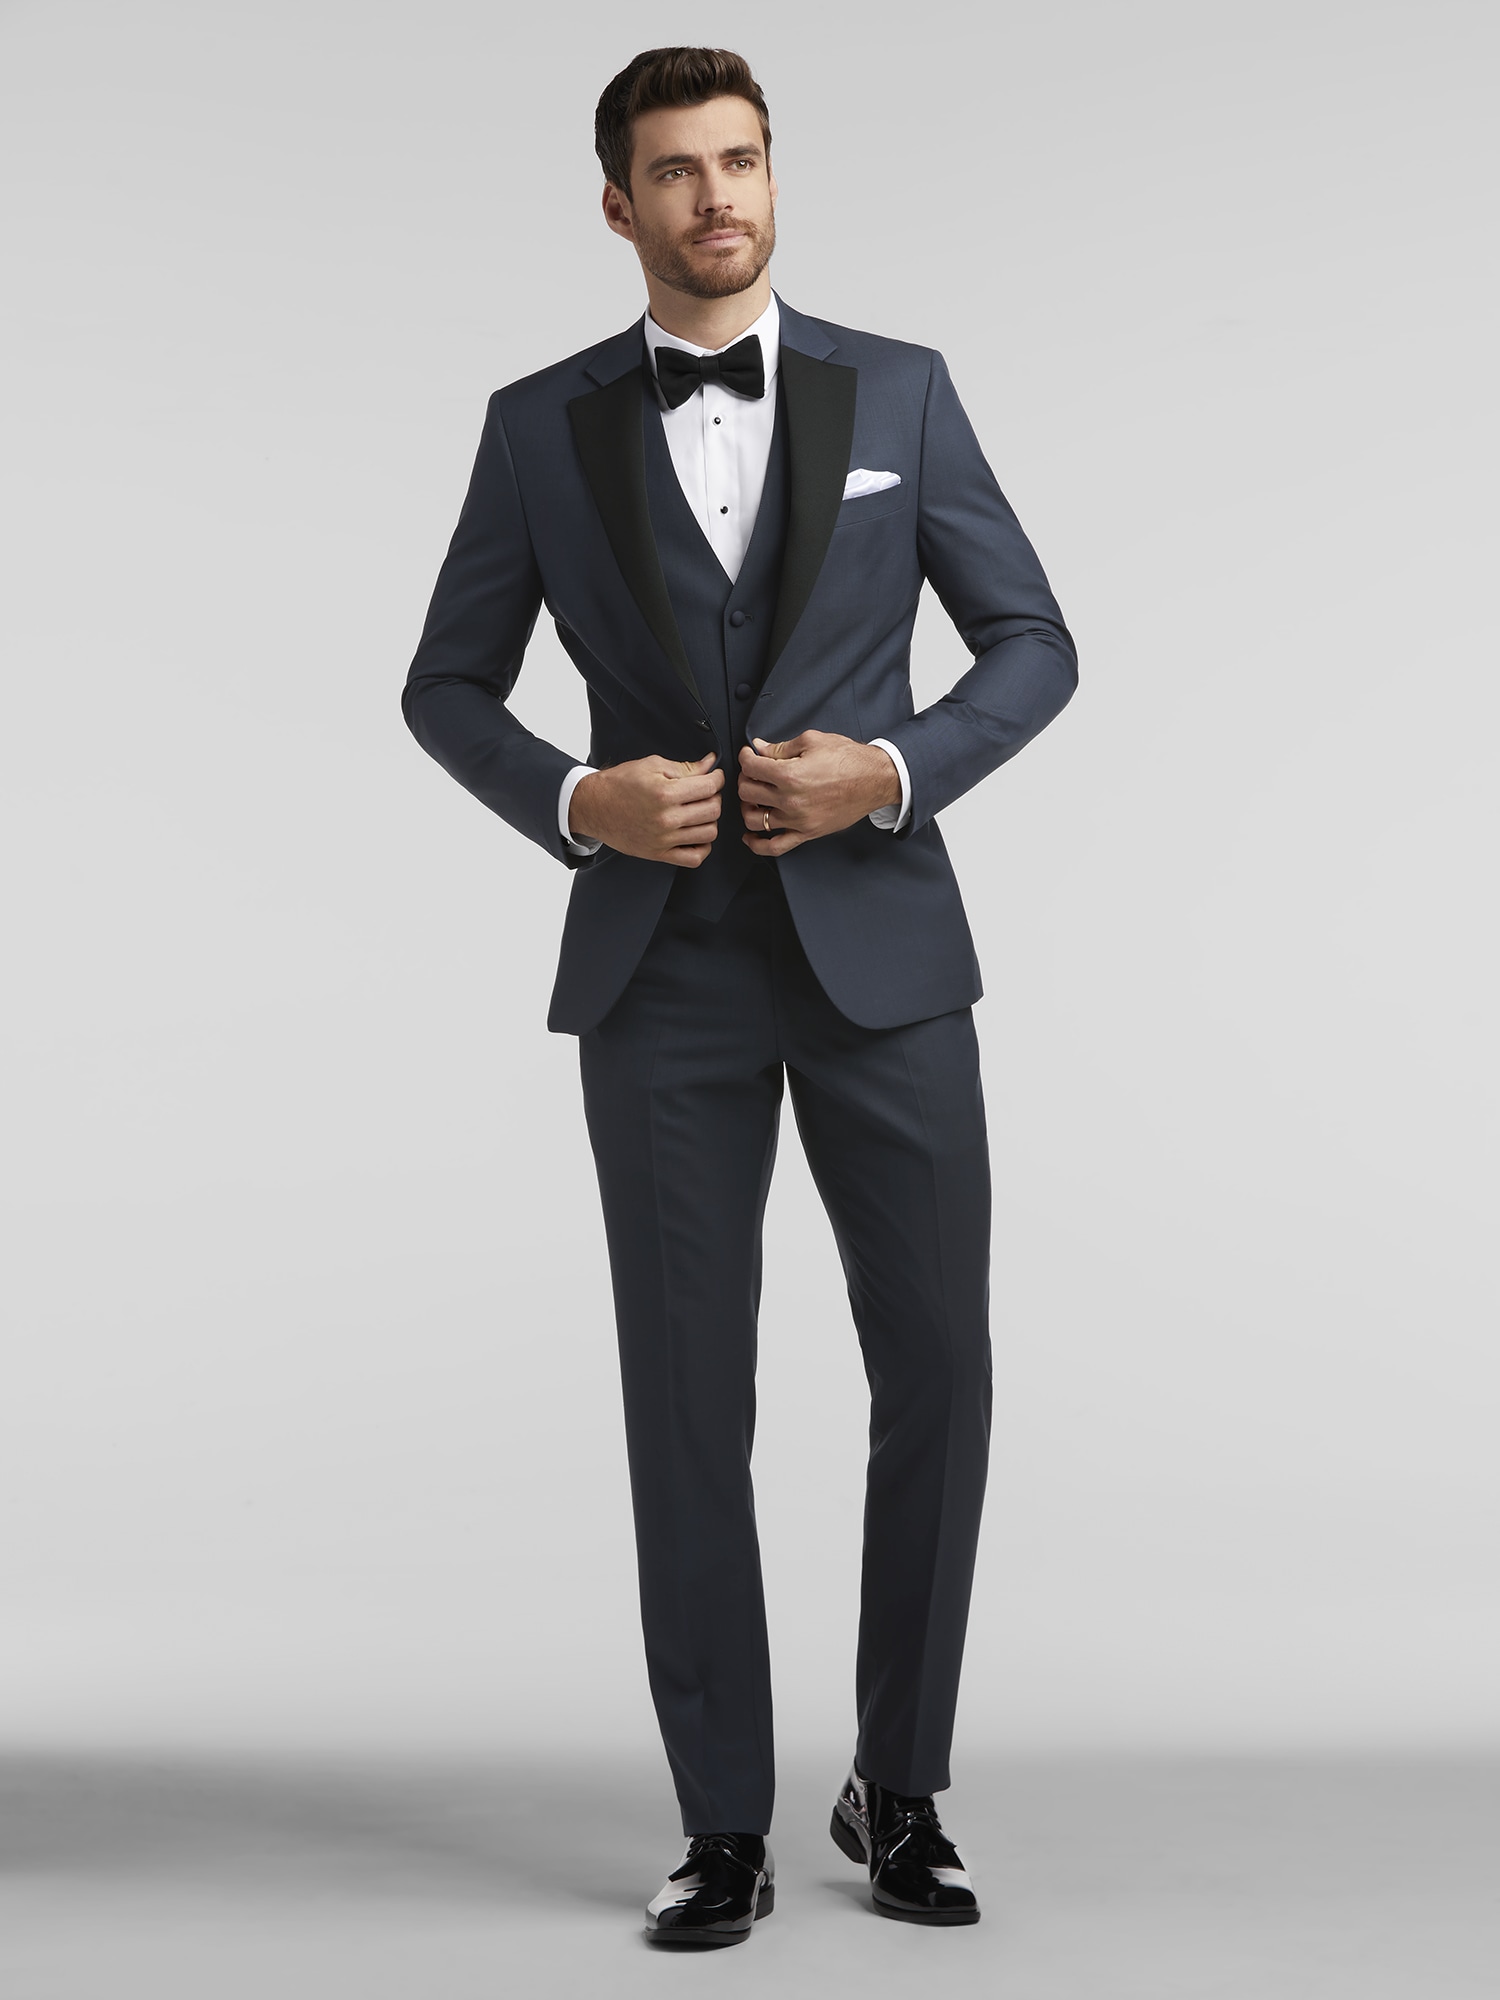 Tuxedo Rental, Men's Tuxedos for Rent | Men's Wearhouse